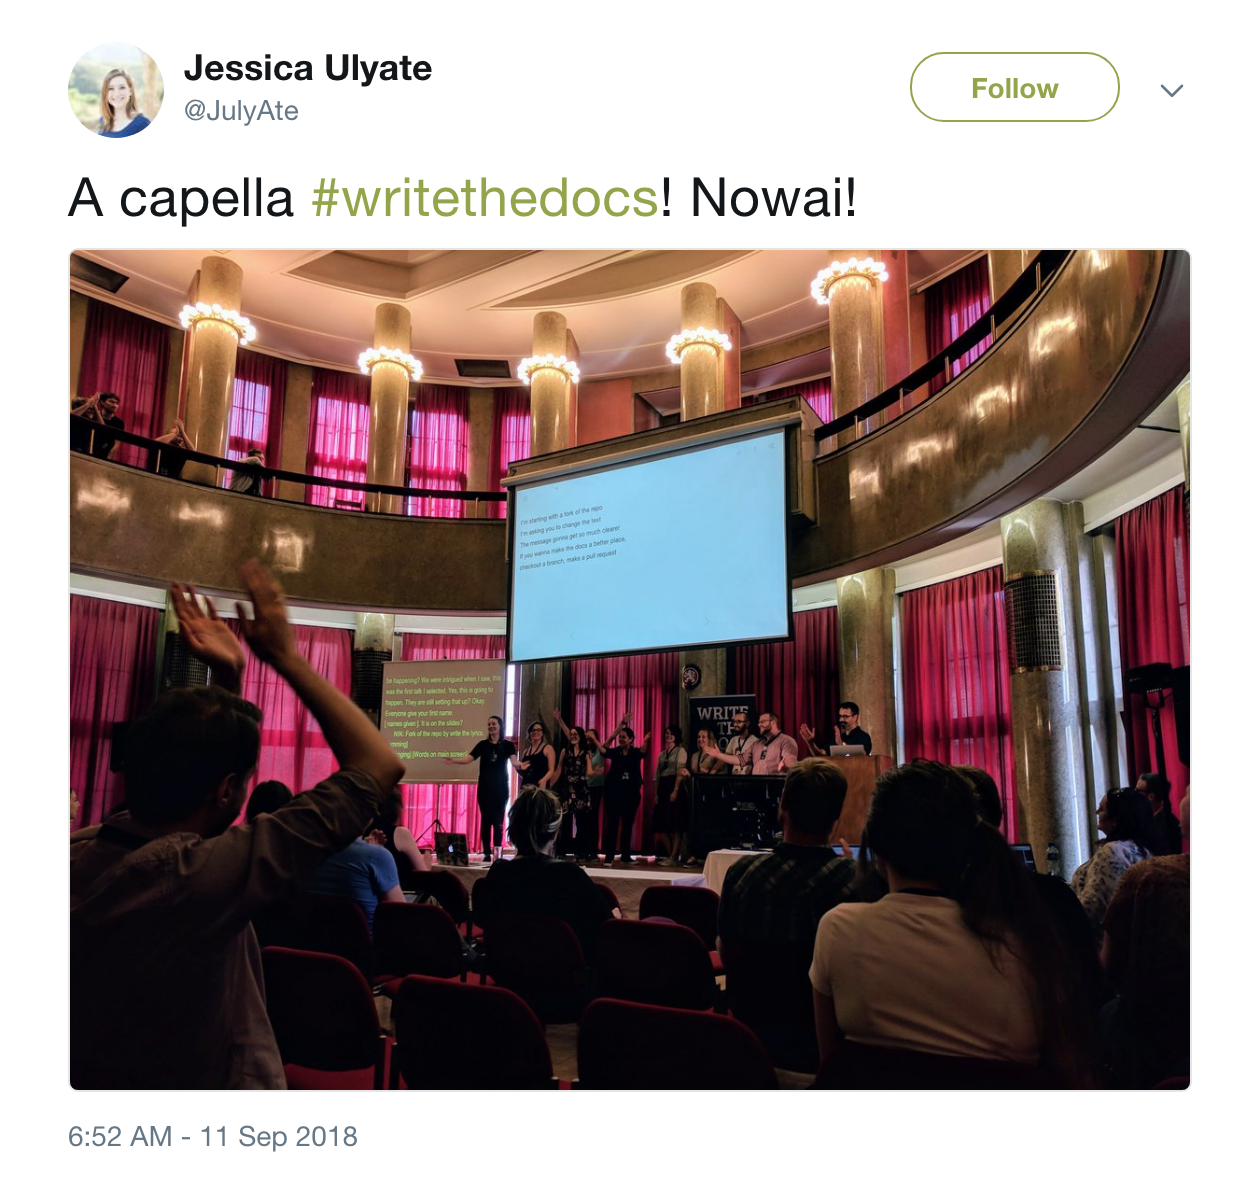 Acapella group singing tweet by Jessica Ulyate